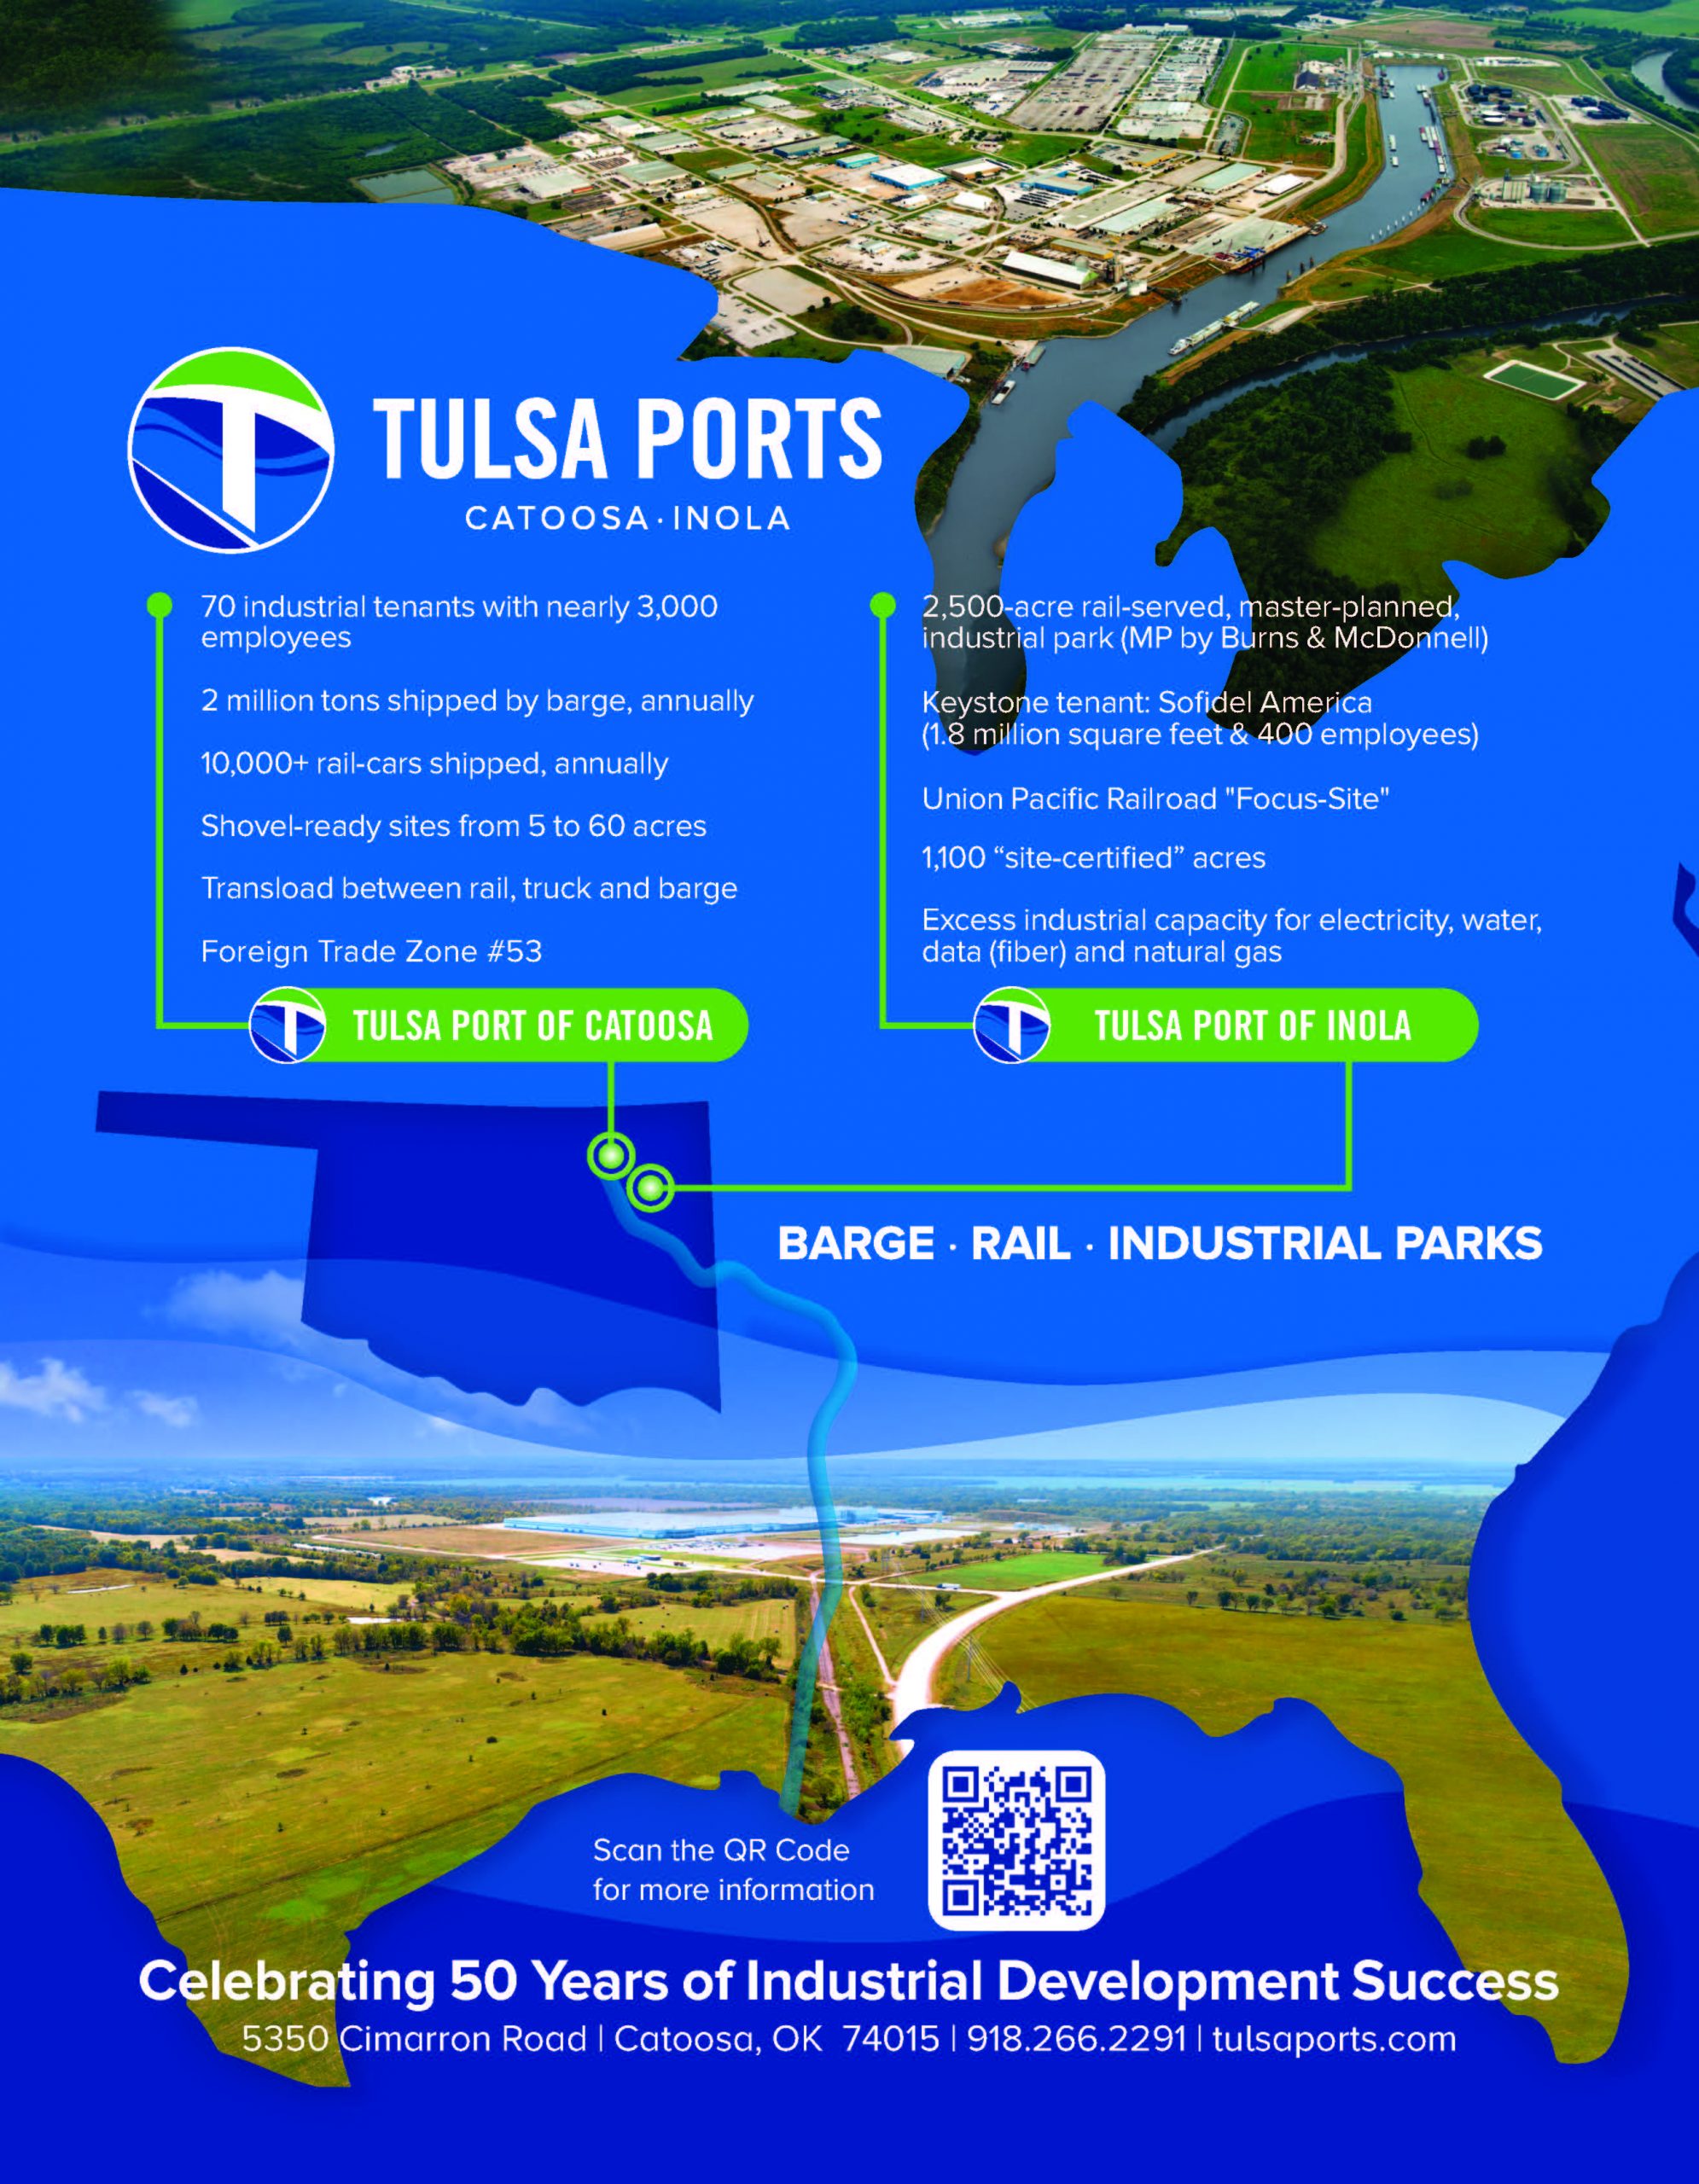 Tulsa Ports